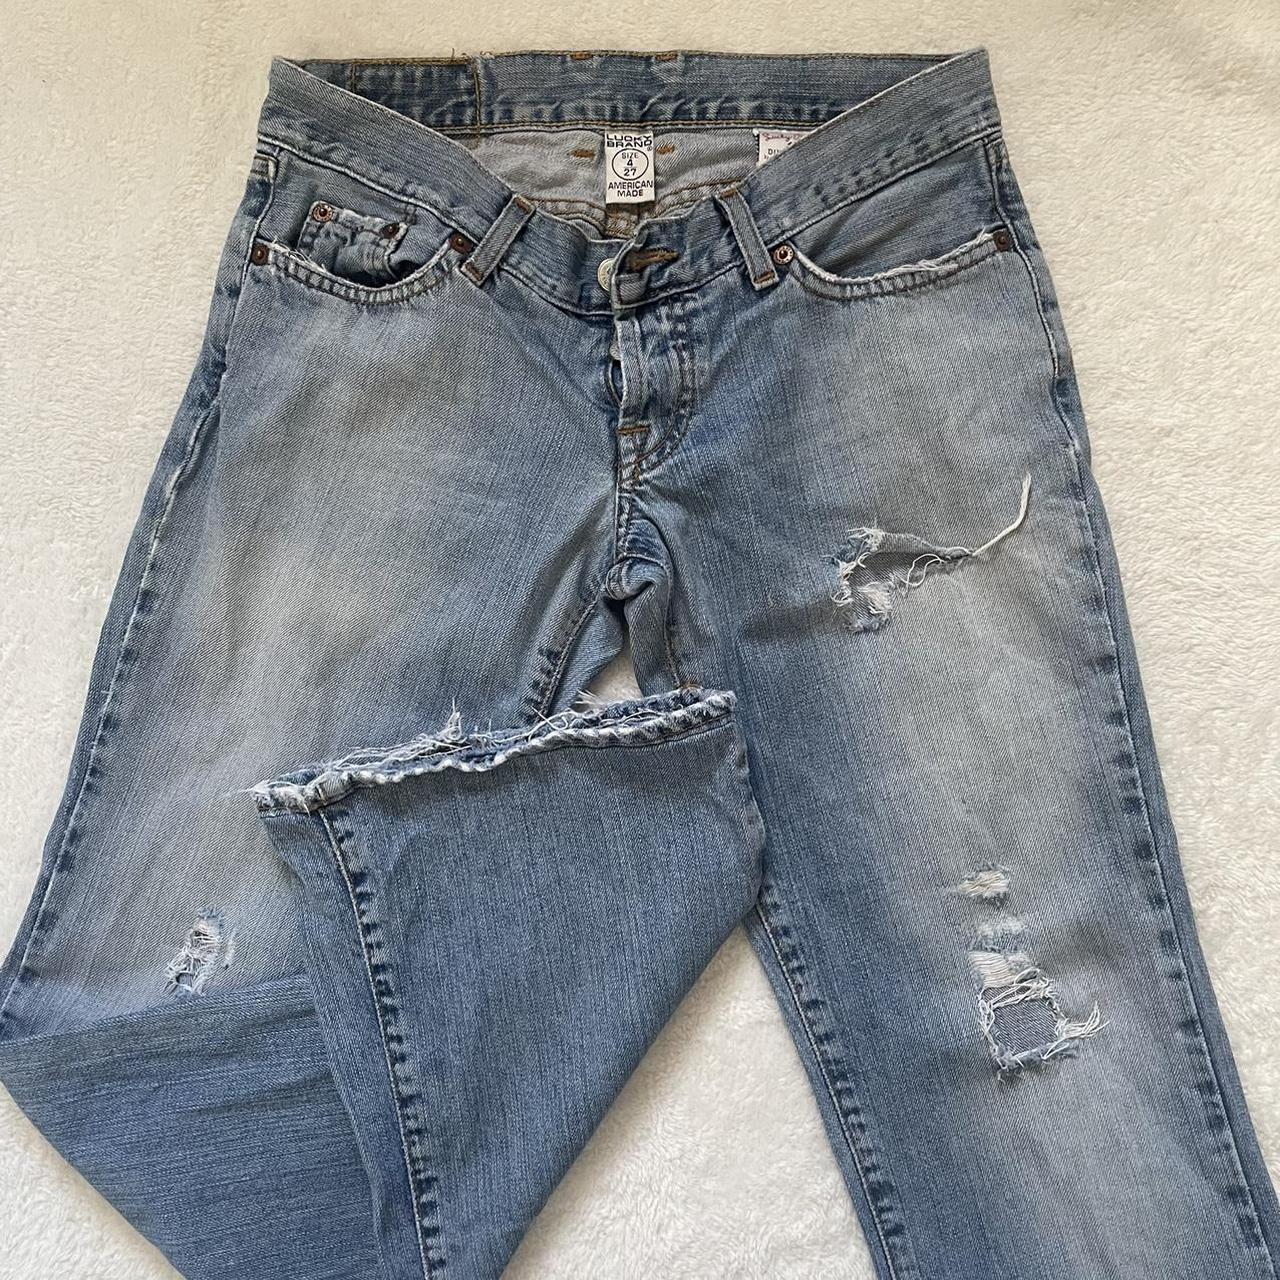 Worn Lucky Brand regular rise jeans with slight... - Depop